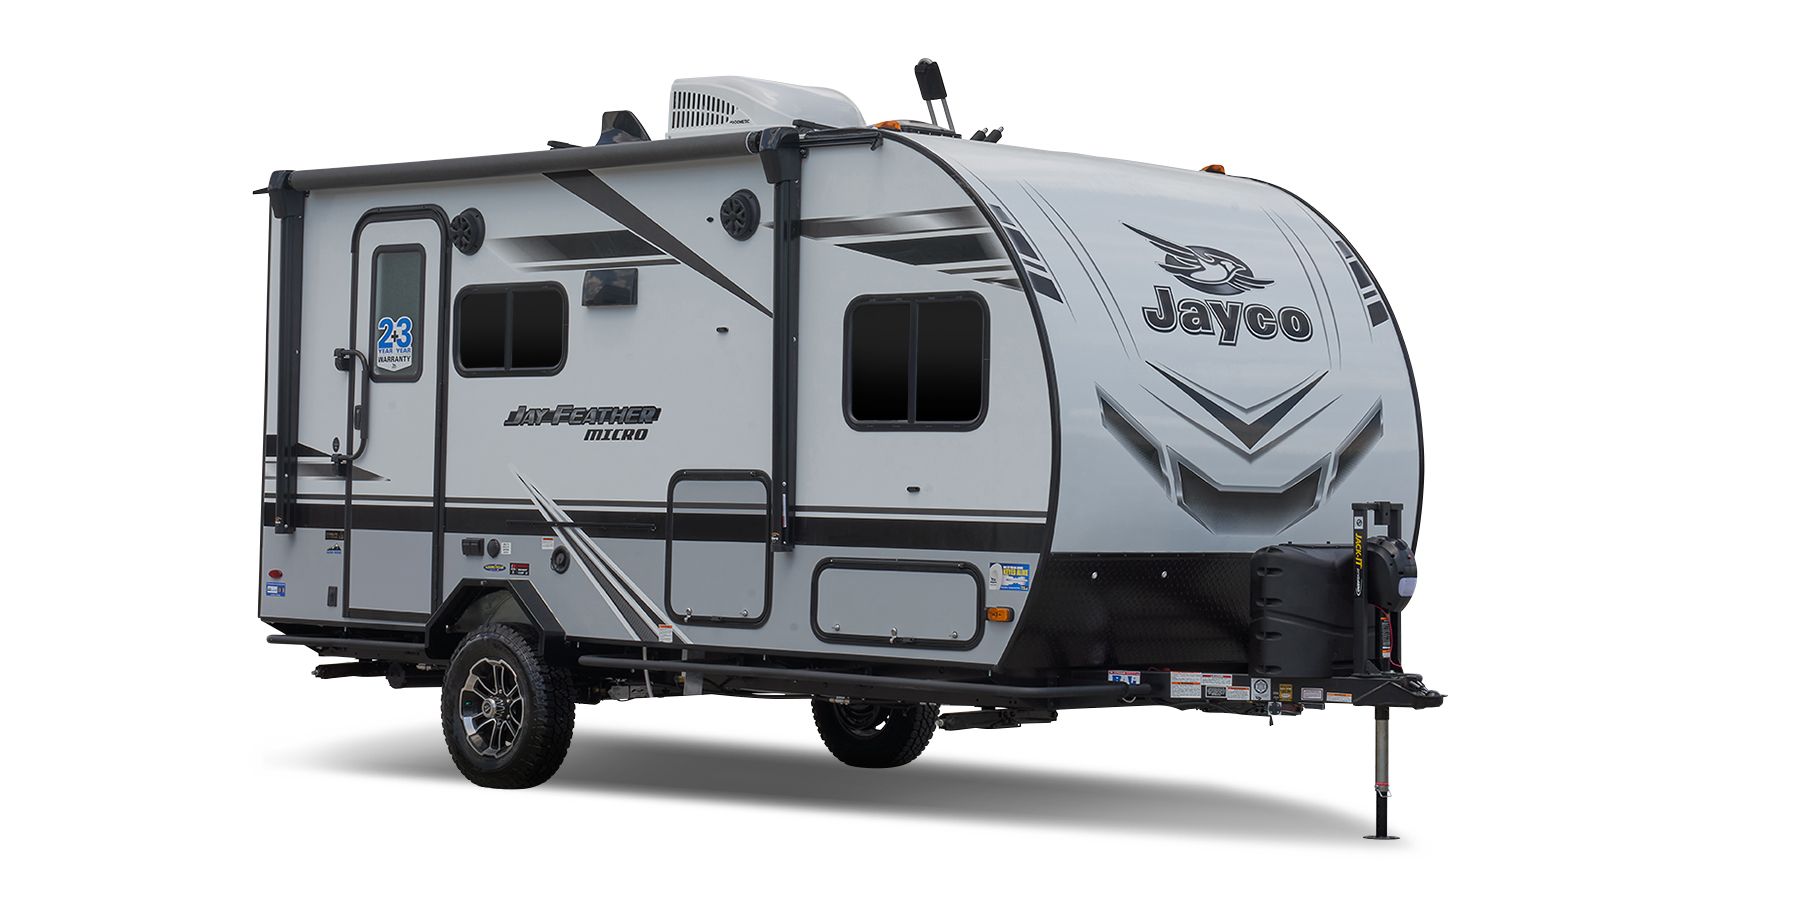 jayco travel trailers small